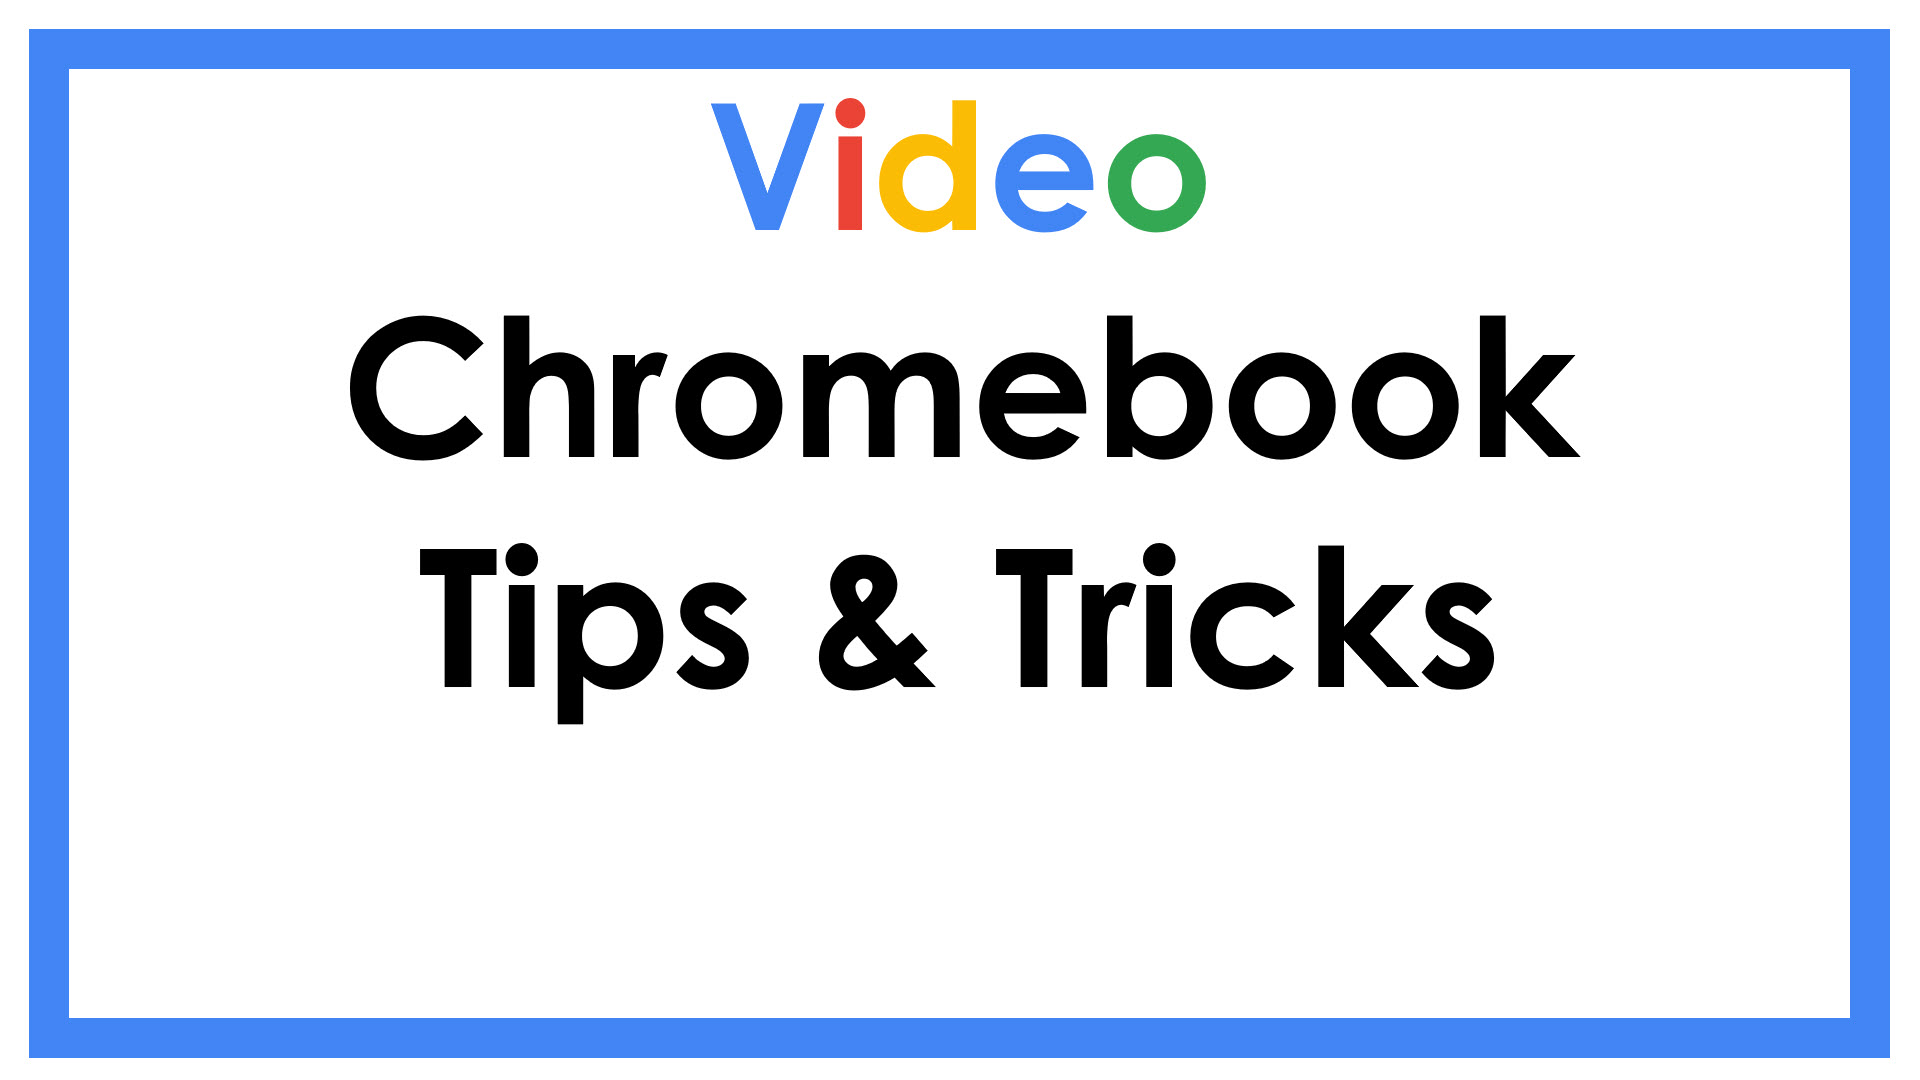 Video Chromebook Tips & Tricks